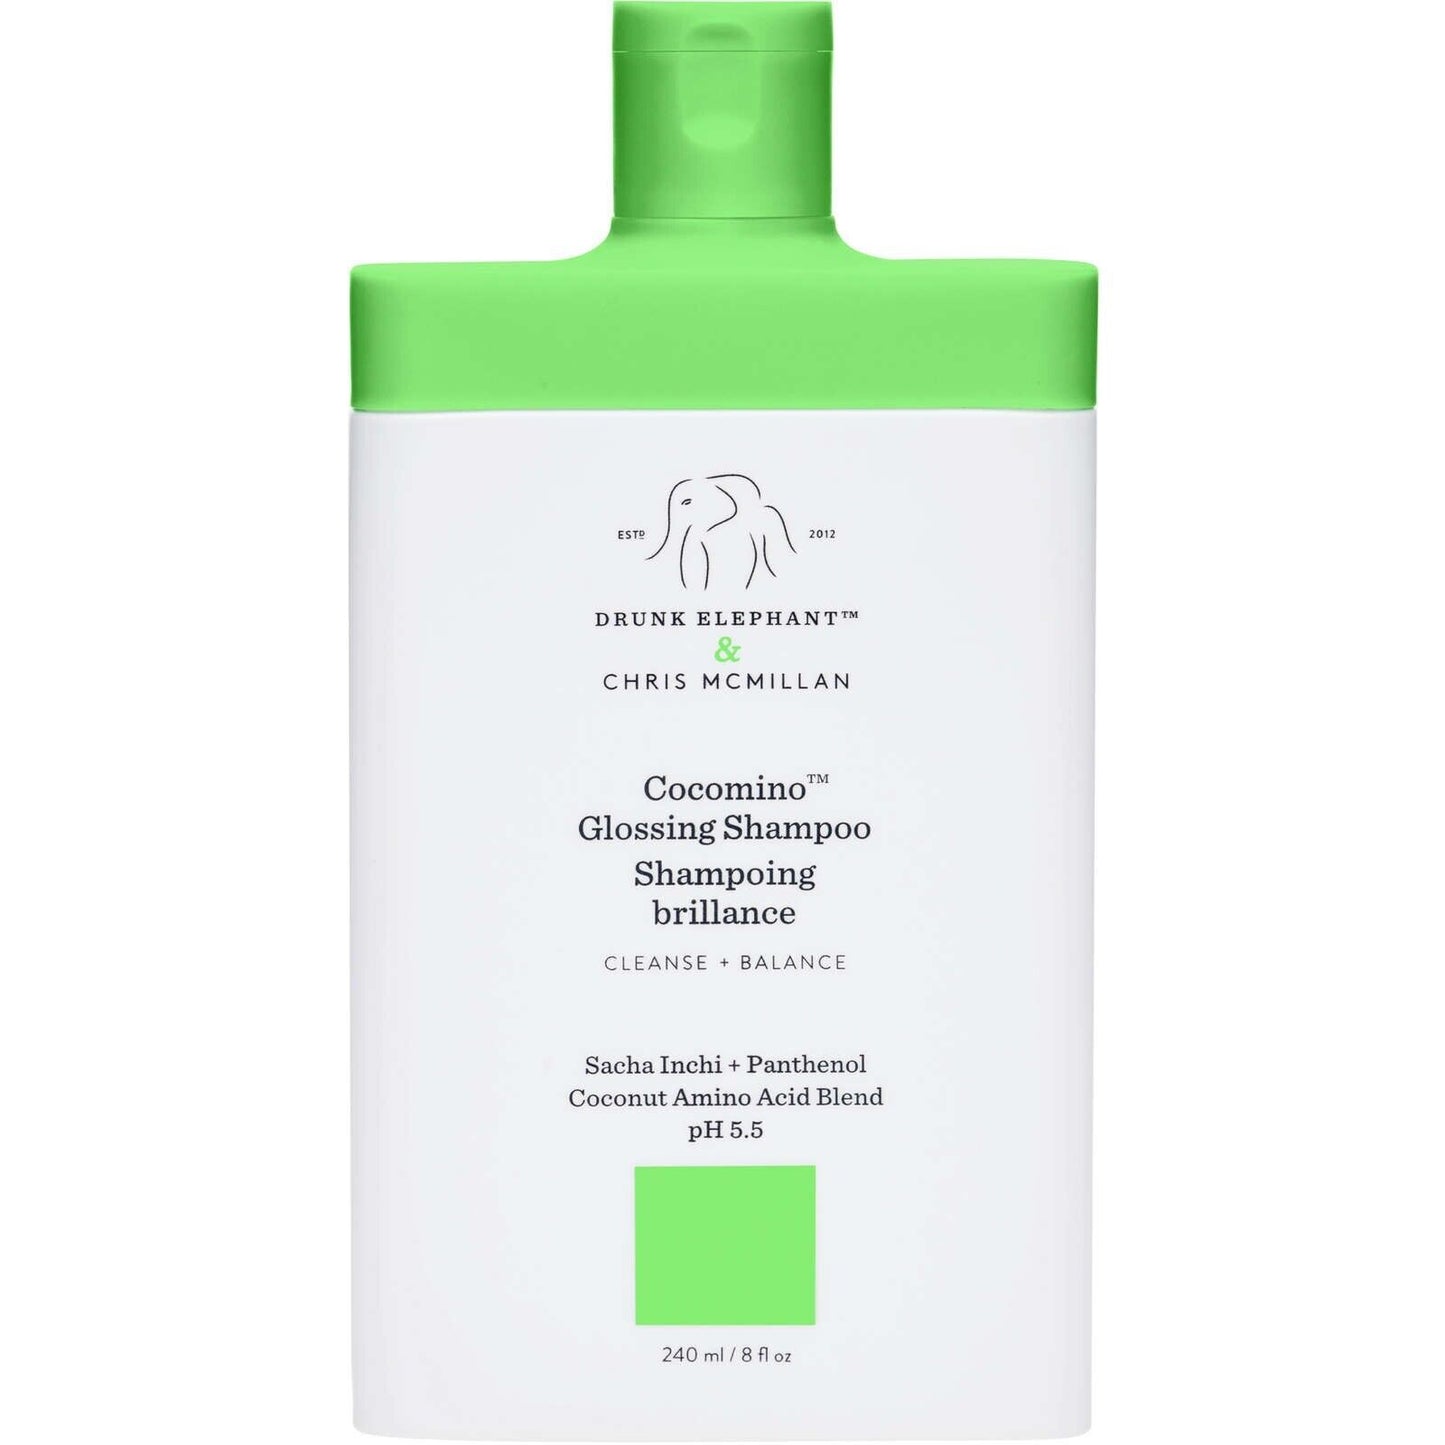 Drunk Elephant Cocomino Glossing Shampoo Scalp Hair Creamy Foamy 240ml NEW